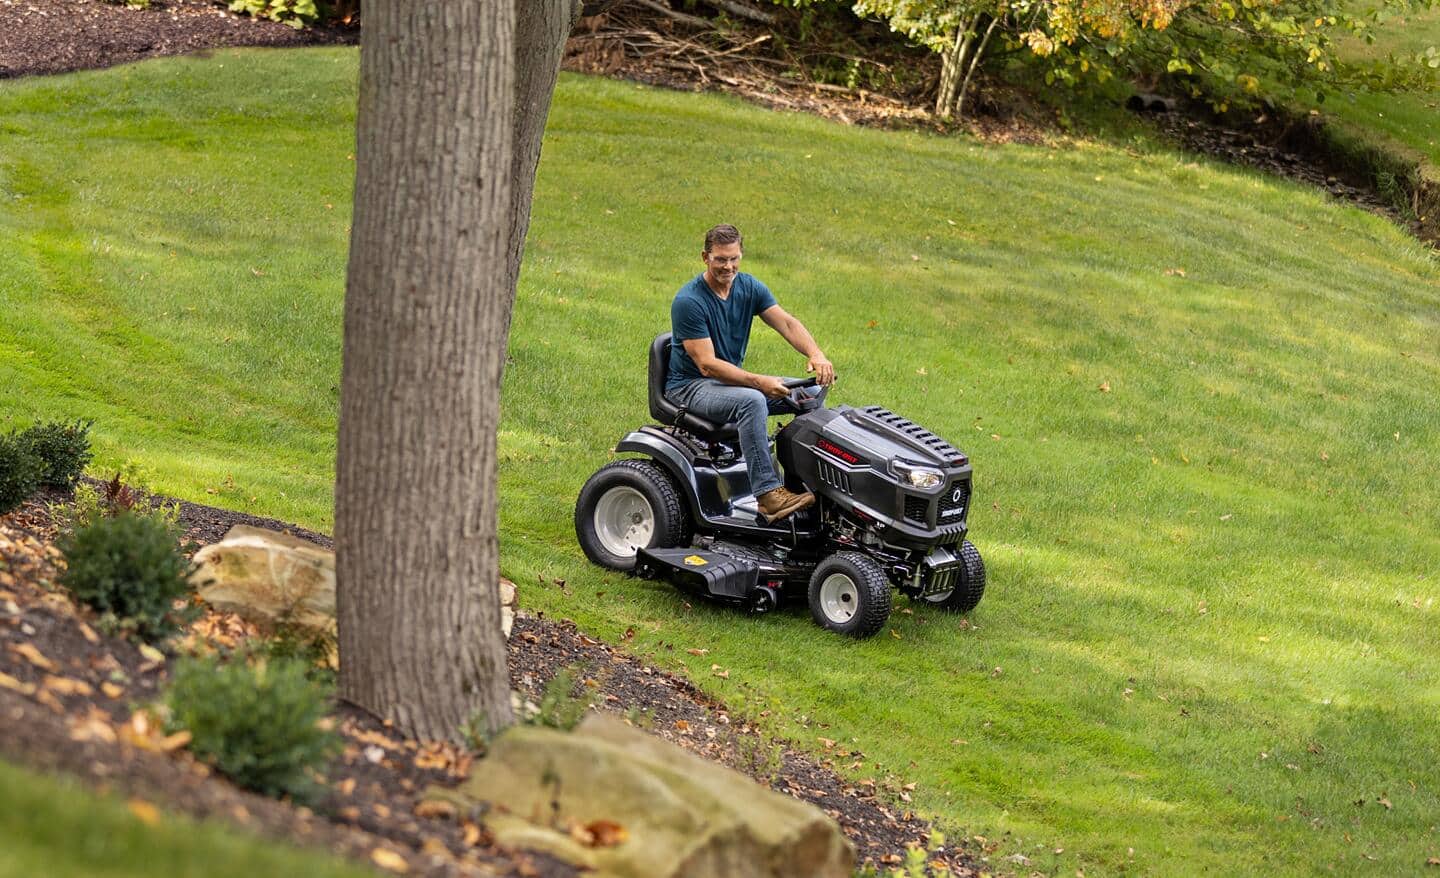 A man on a riding lawn mower mows a healthy green lawn